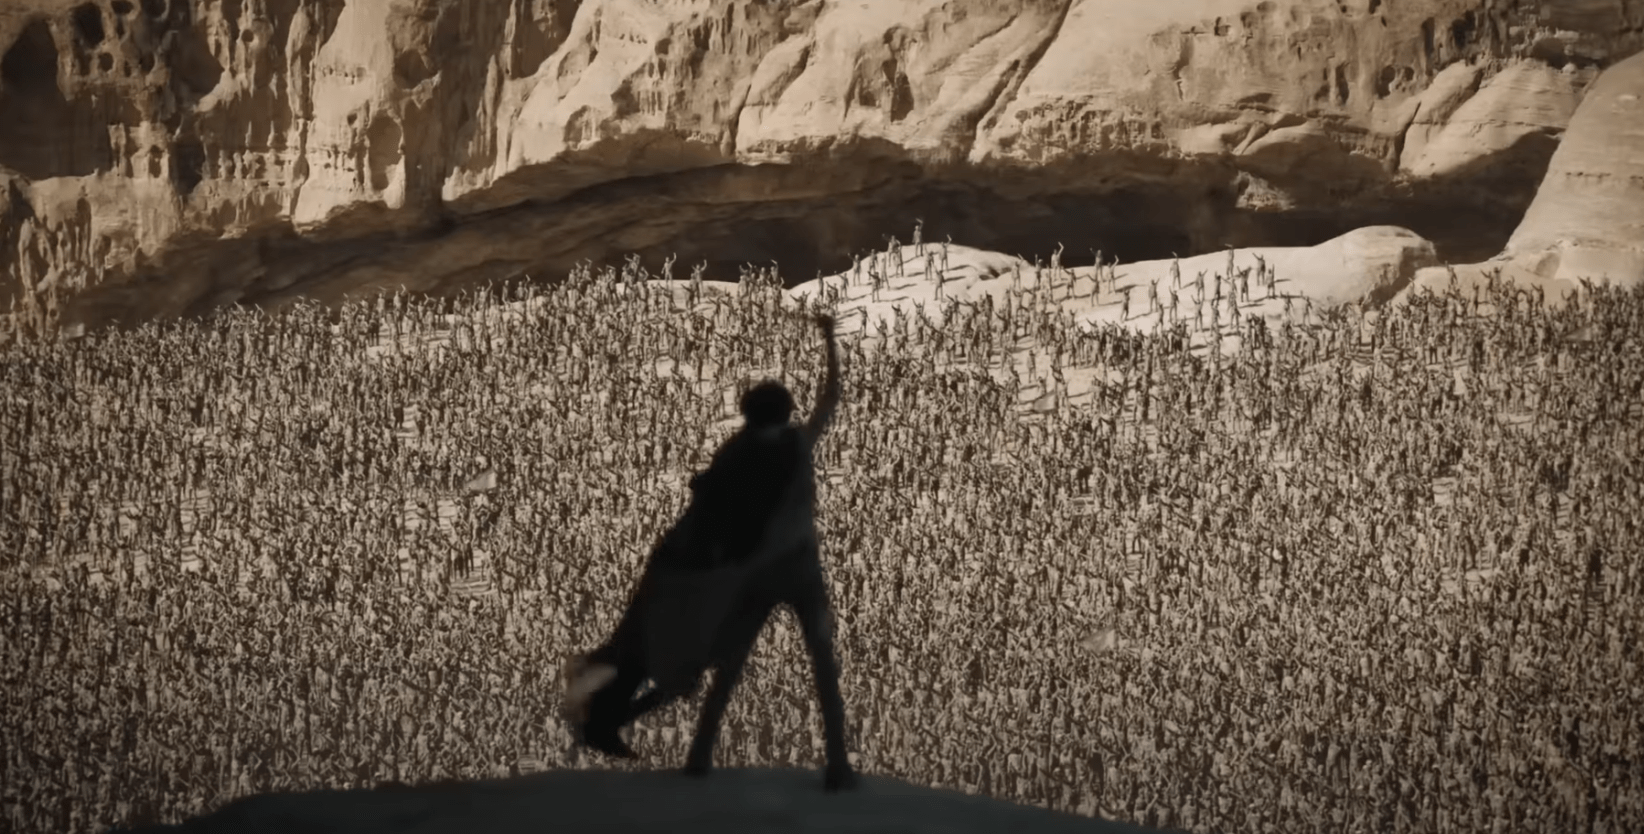 Timothee Chalamet's Paul Atreides addressing the Fremen in Dune: Part Two.